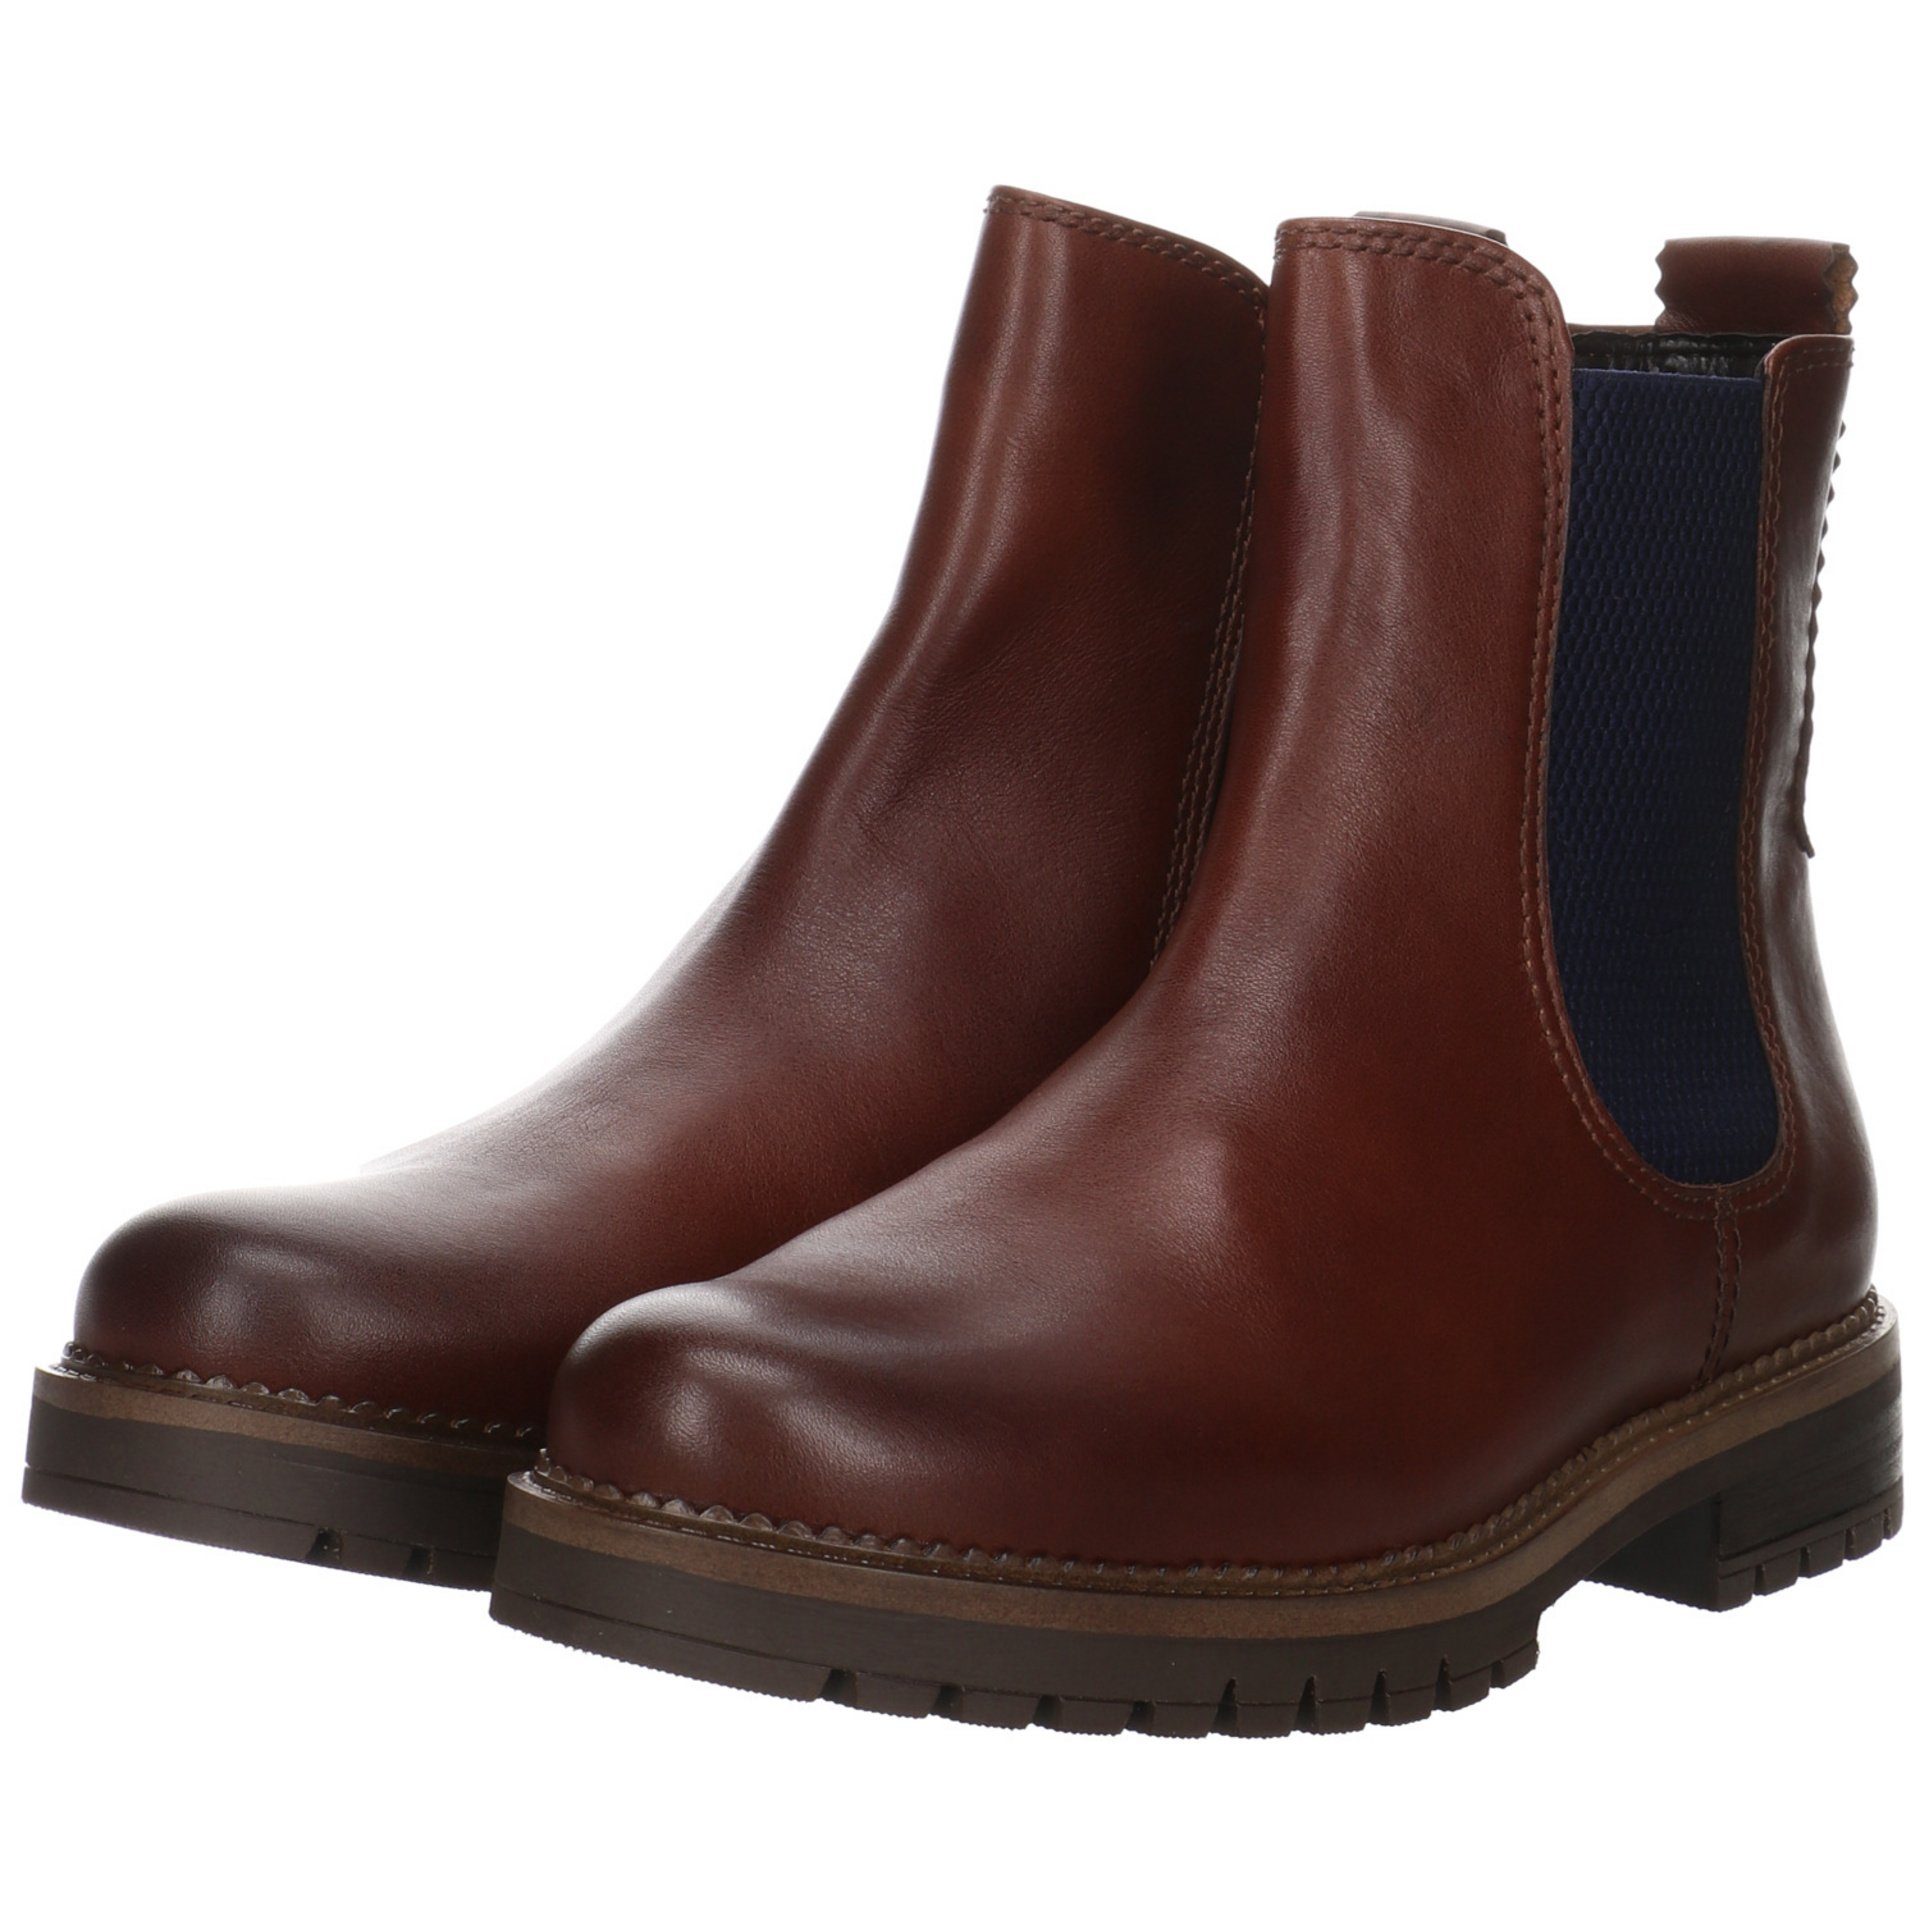 Gabor Damen Stiefel Schuhe Leder-/Textilkombination Stiefel Chelsea (river) sattel Boots